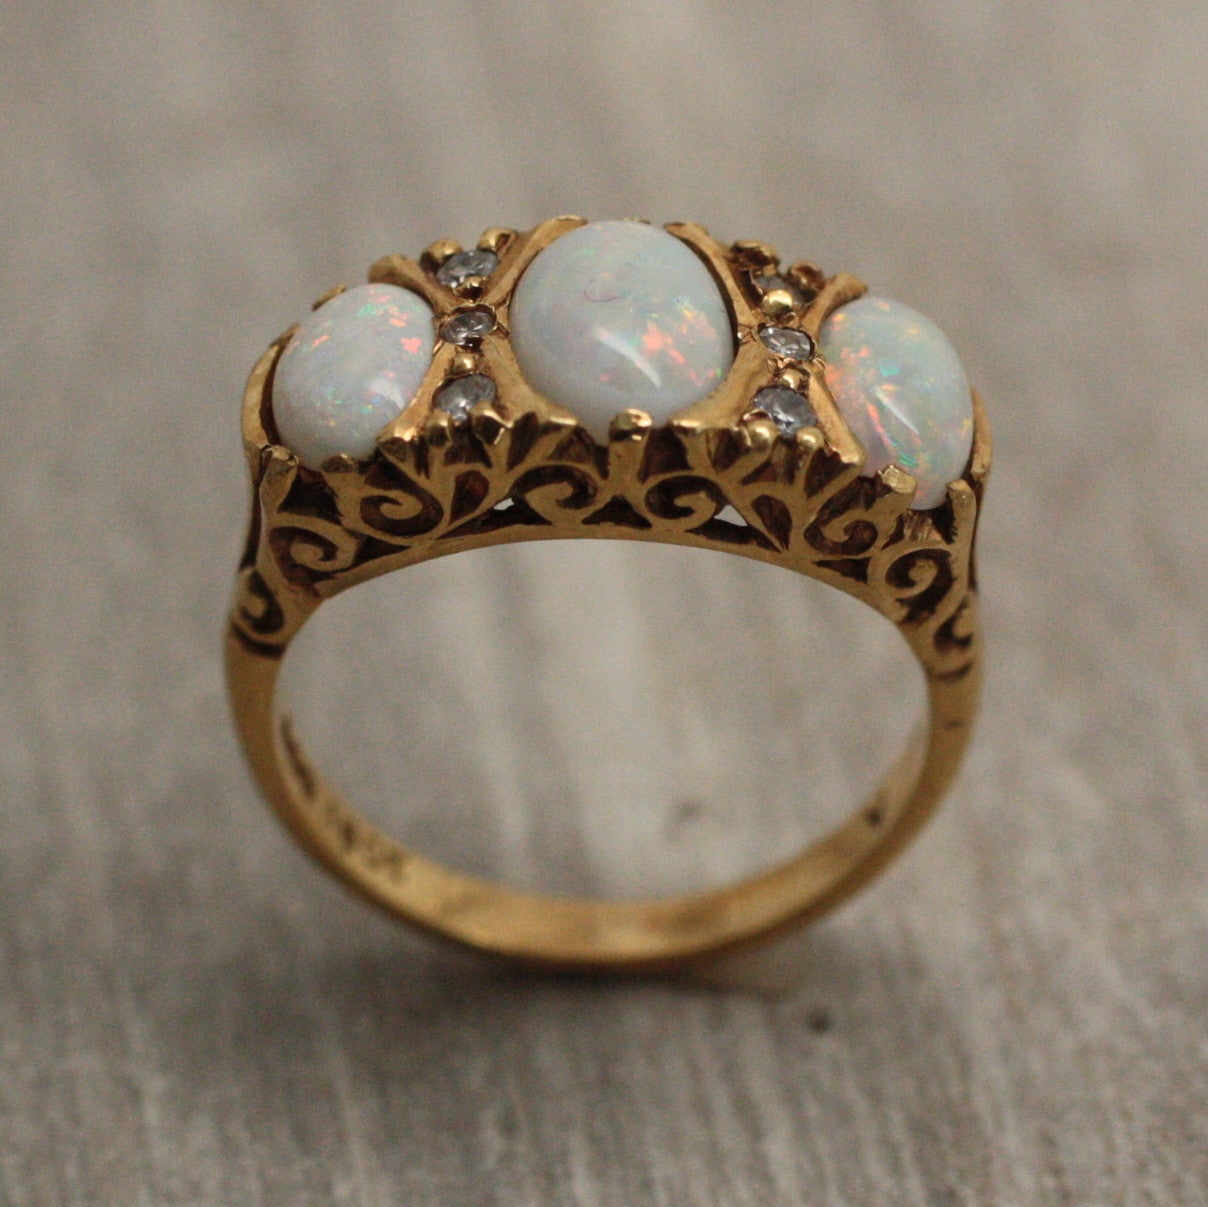 Circa 1930 Birmingham-Style Opal & Diamond Ring